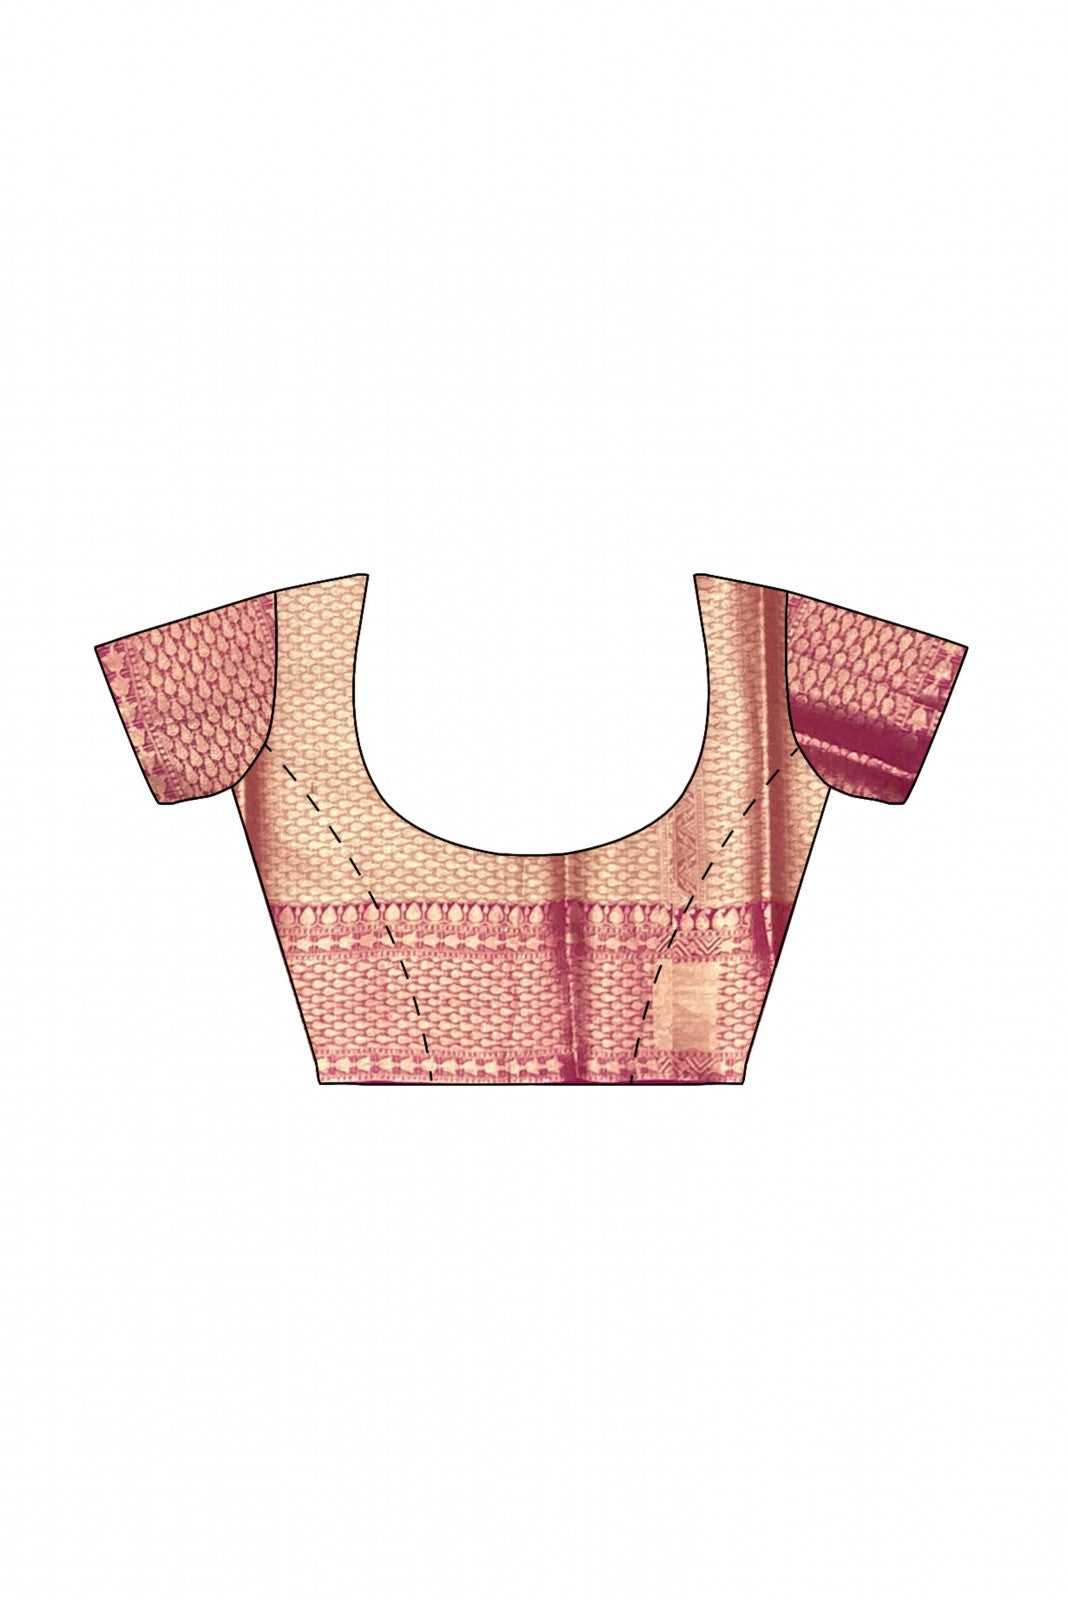 Kanchi Pattu Tissue Silk Saree - Pink